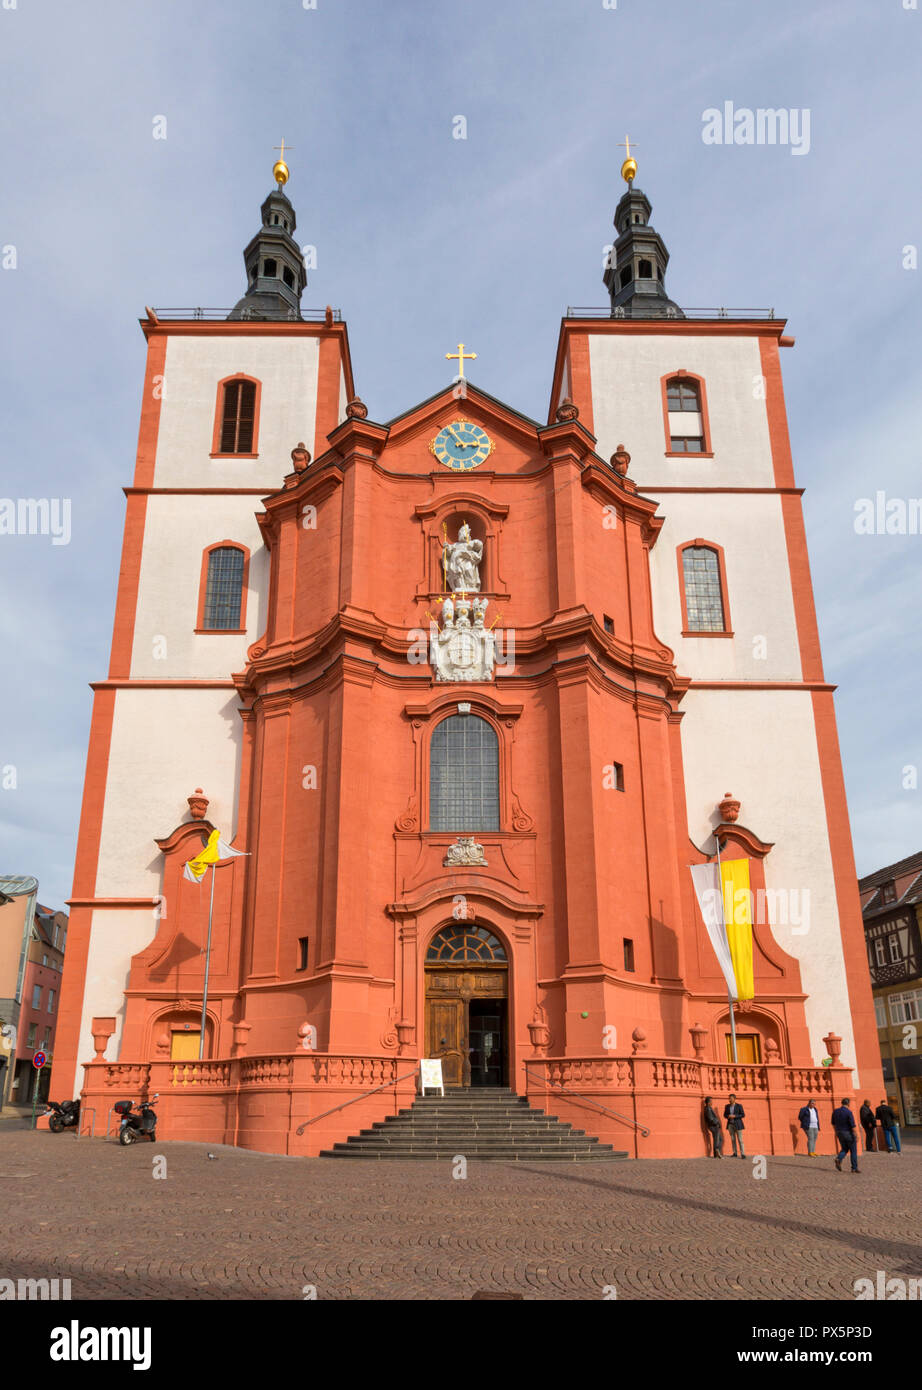 Saint Blaise church, known as Stadtpfarrkirche Sankt Blasius at Flda, Hesse, Germany Stock Photo